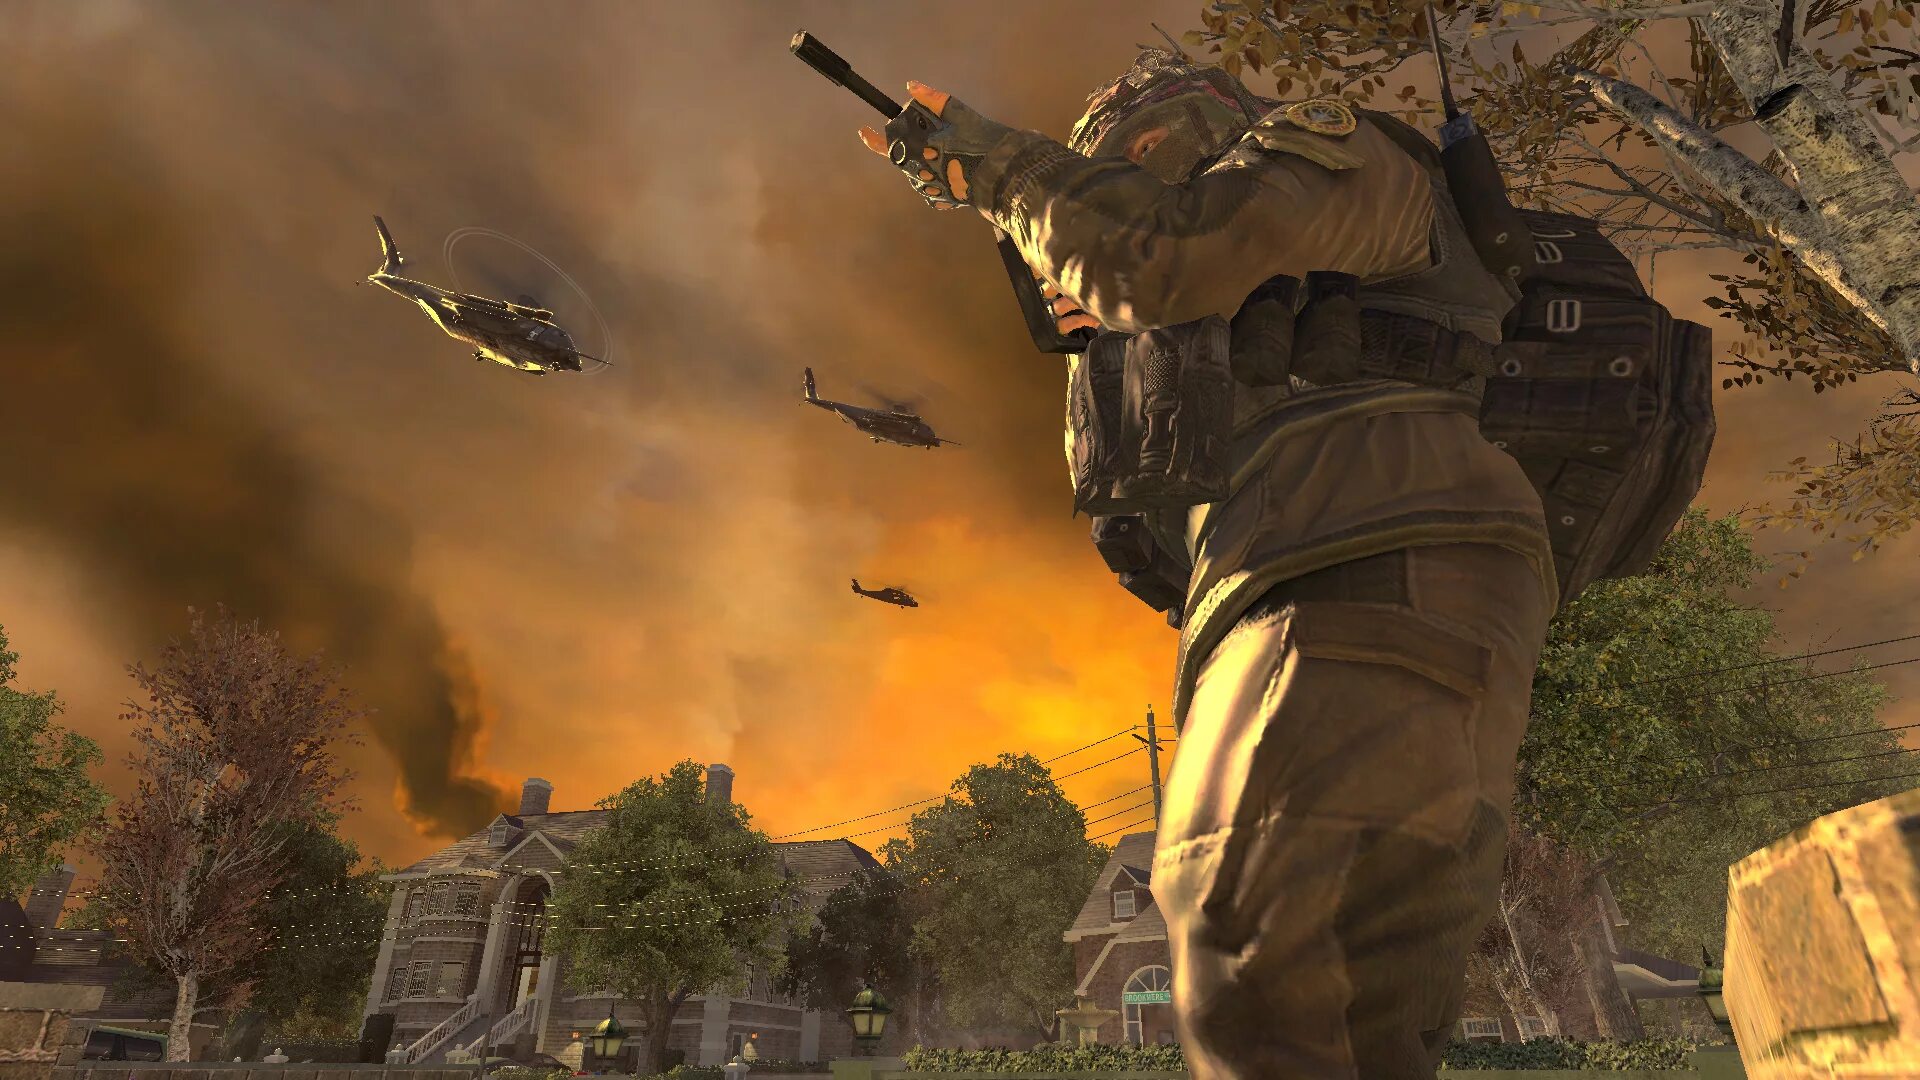 Modern Warfare 2. Mw2 Remastered Airborne. Call of Duty: Modern Warfare 2. Cod mw2. Модерн варфайр 2